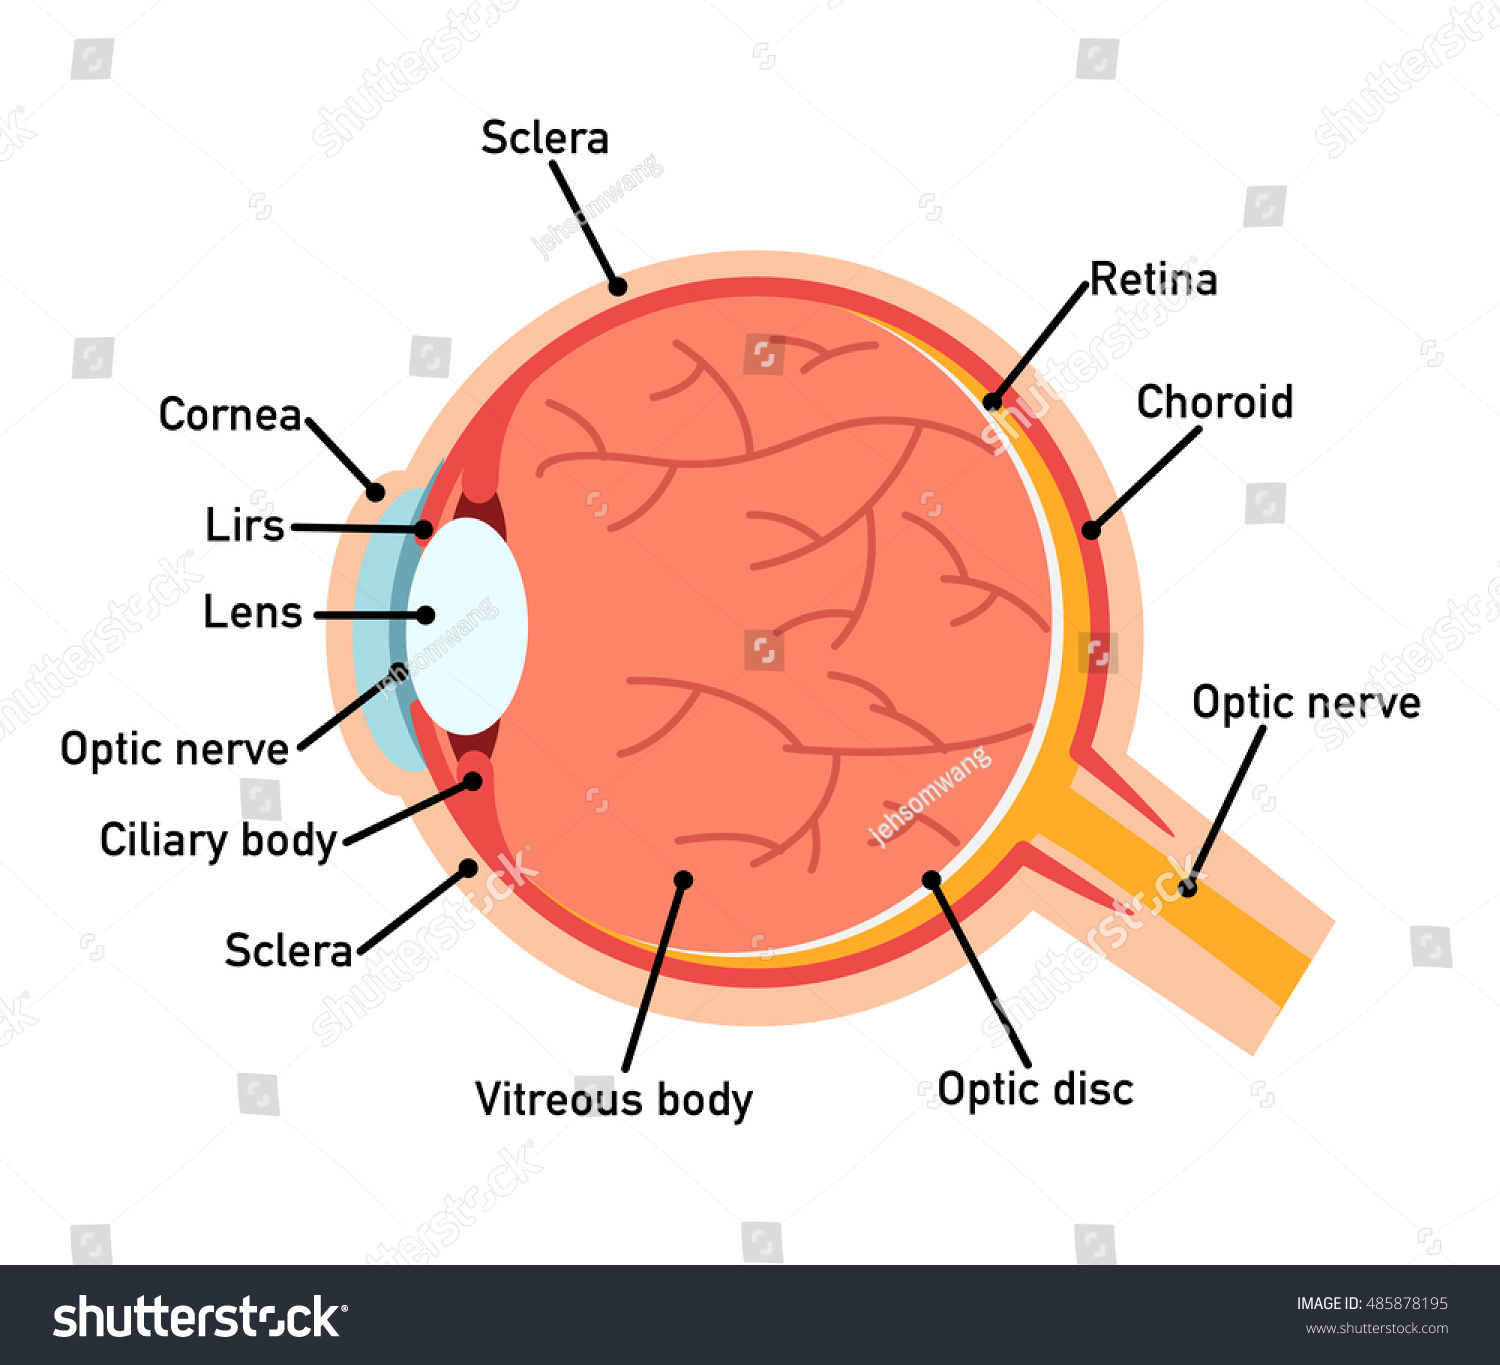 Eye Anatomy Diagram,Vector Illustration. - 485878195 : Shutterstock